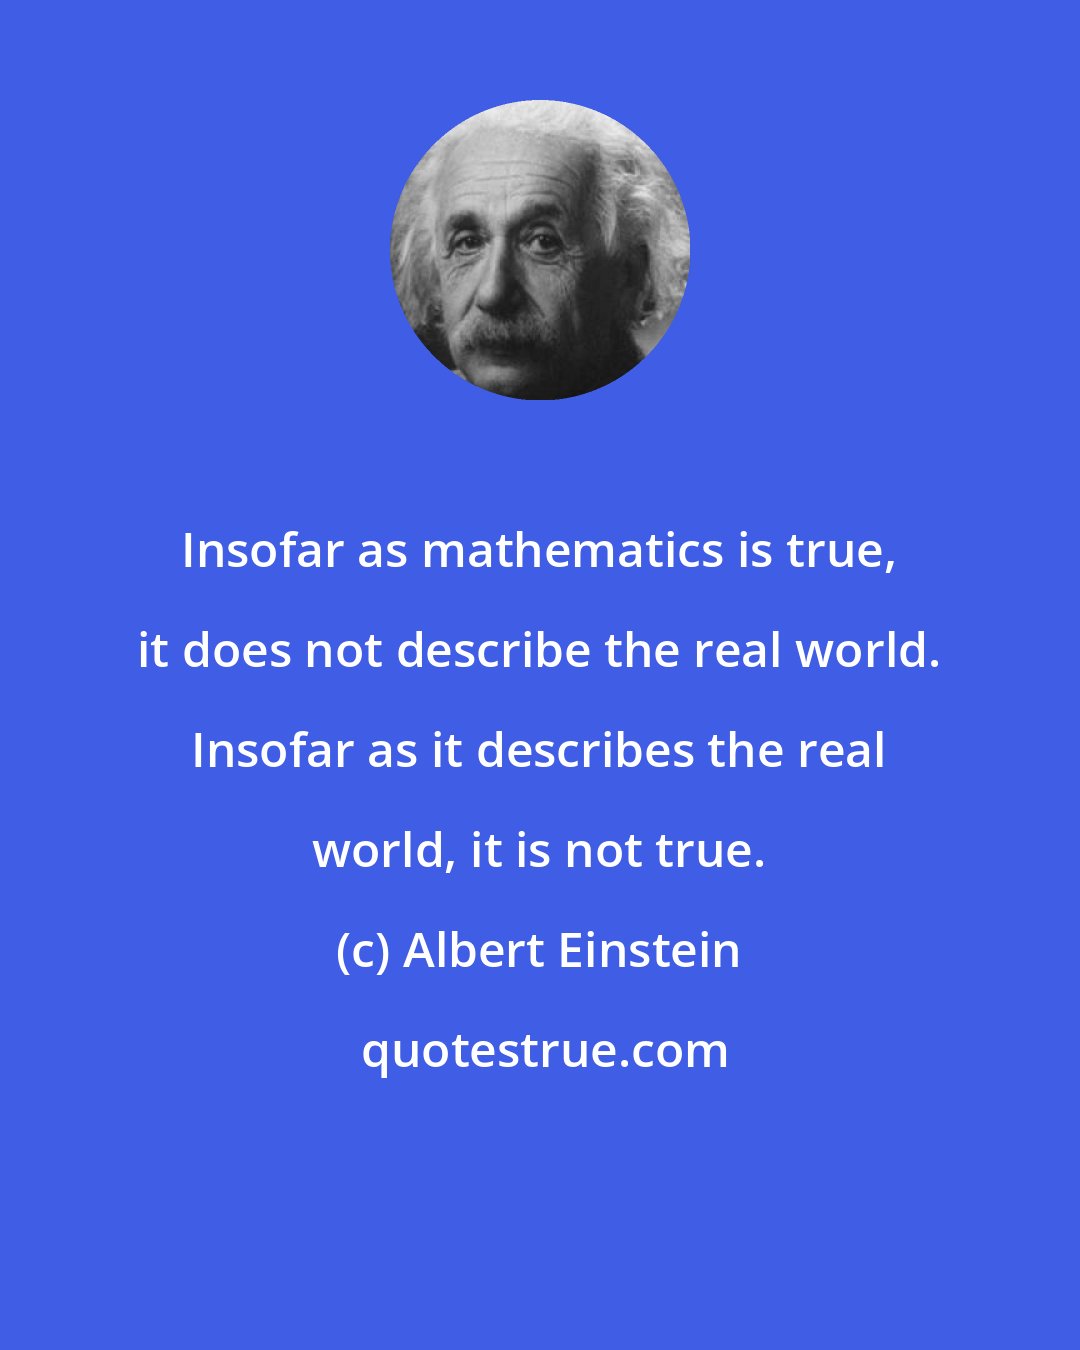 Albert Einstein: Insofar as mathematics is true, it does not describe the real world. Insofar as it describes the real world, it is not true.